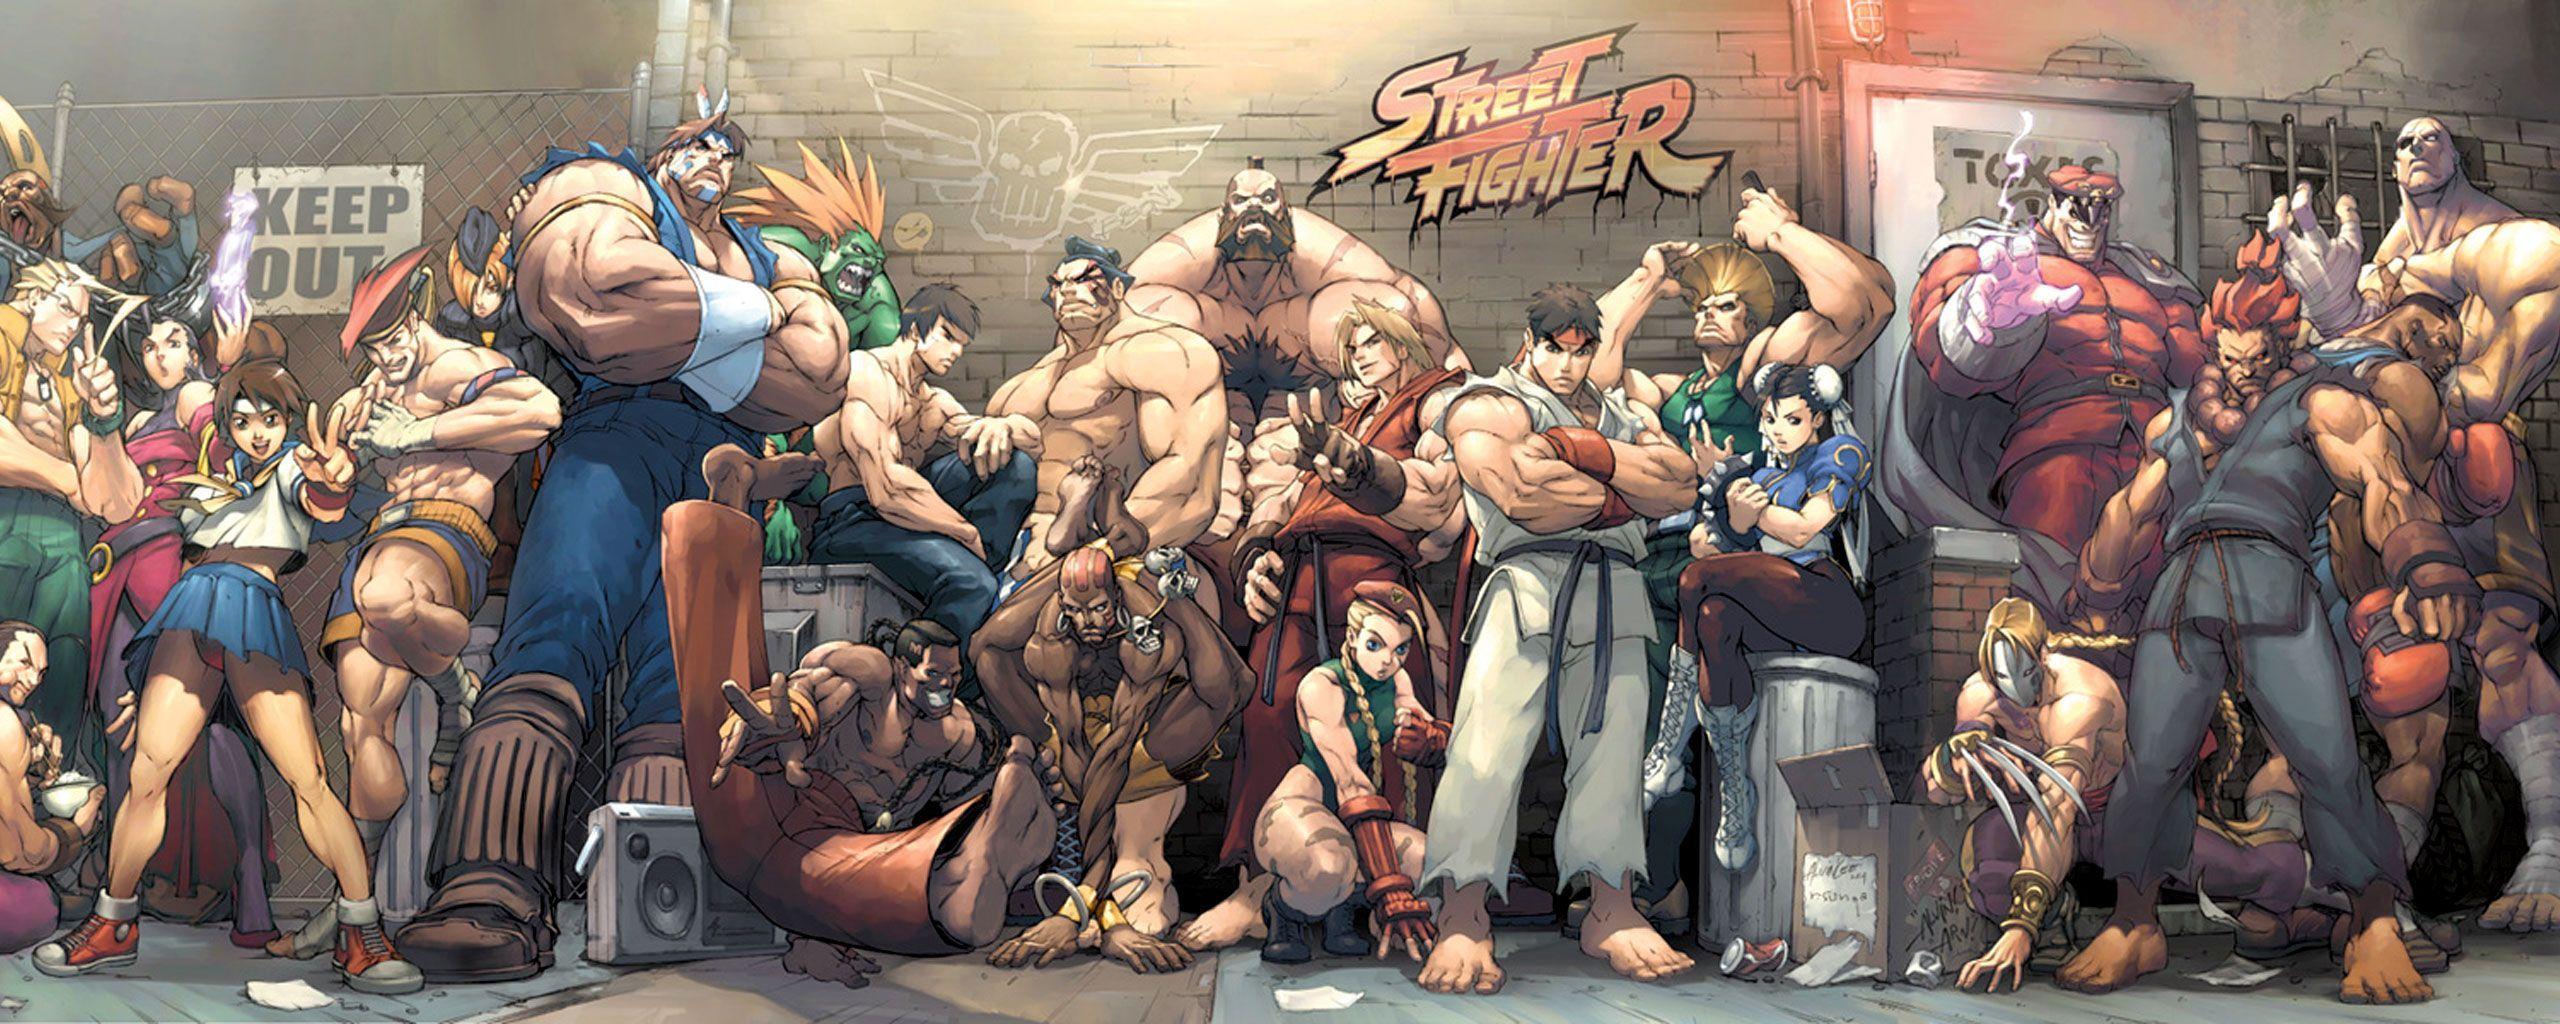 Street Fighter Wallpaper 1080p